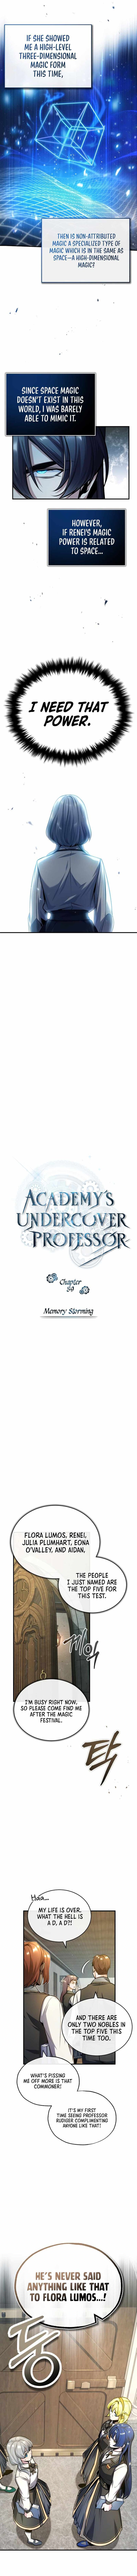 Academys Undercover Professor 59 6